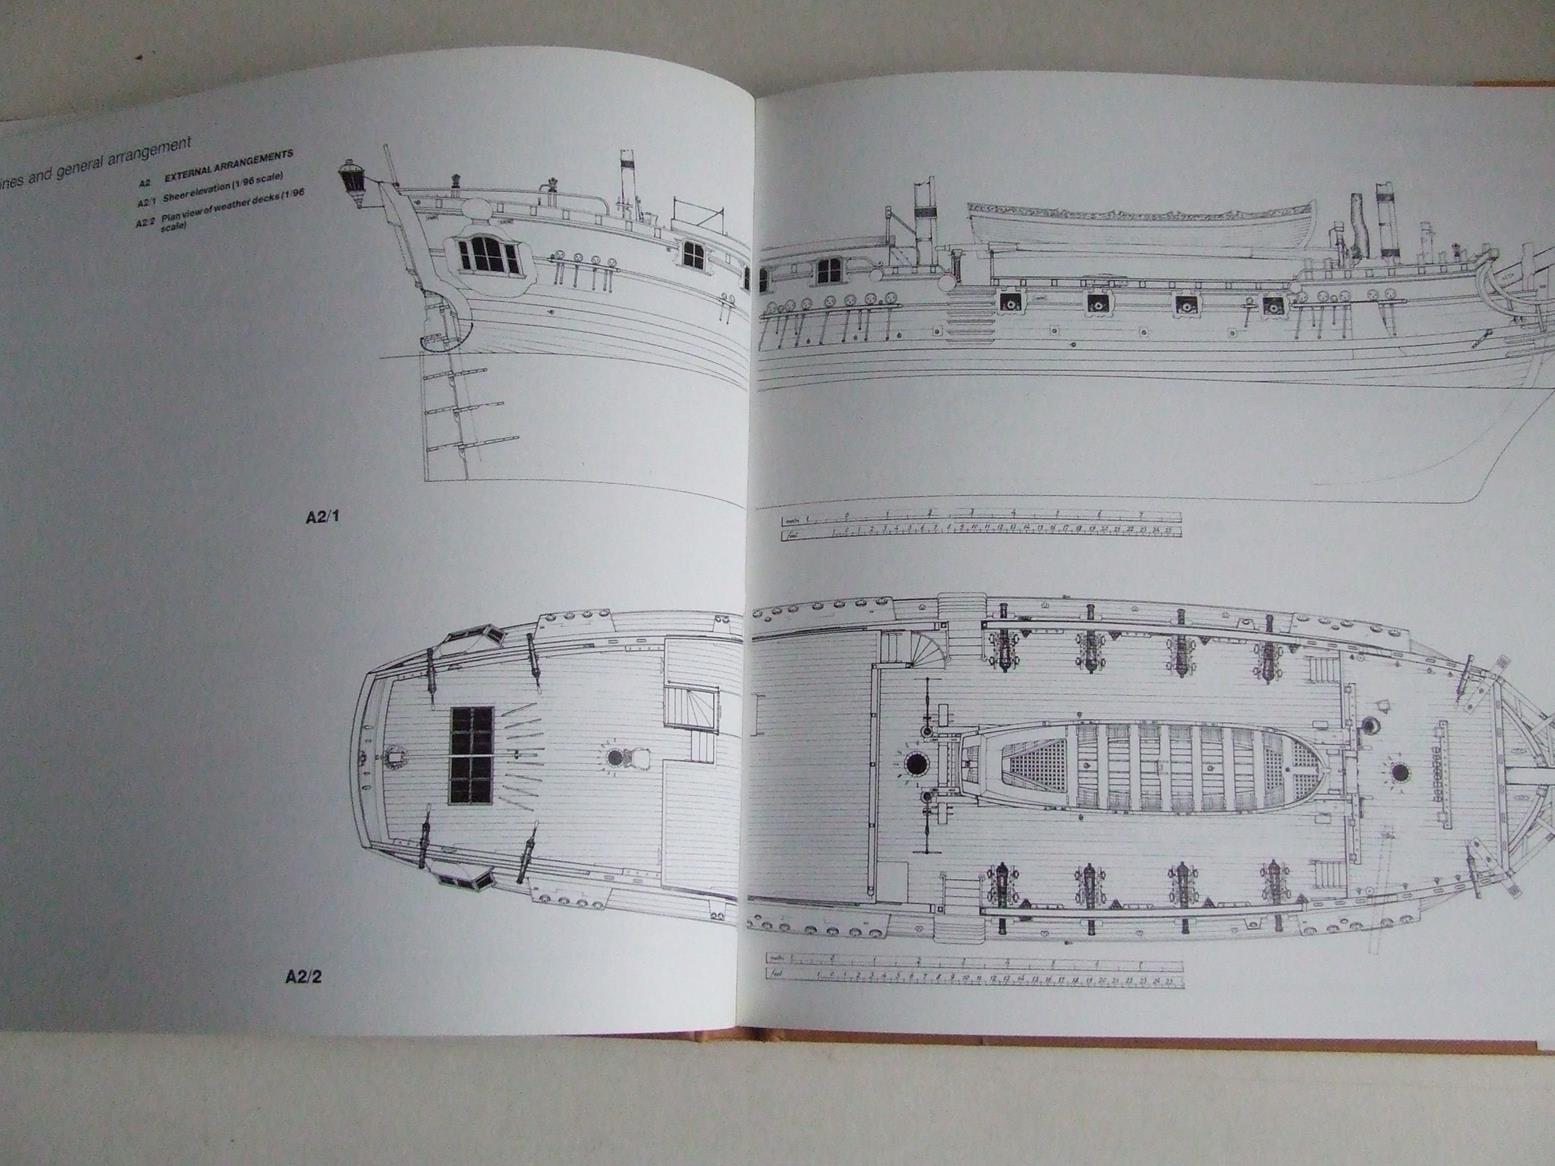 The Royal Yacht Caroline 1749 [Anatomy of the Ship series]